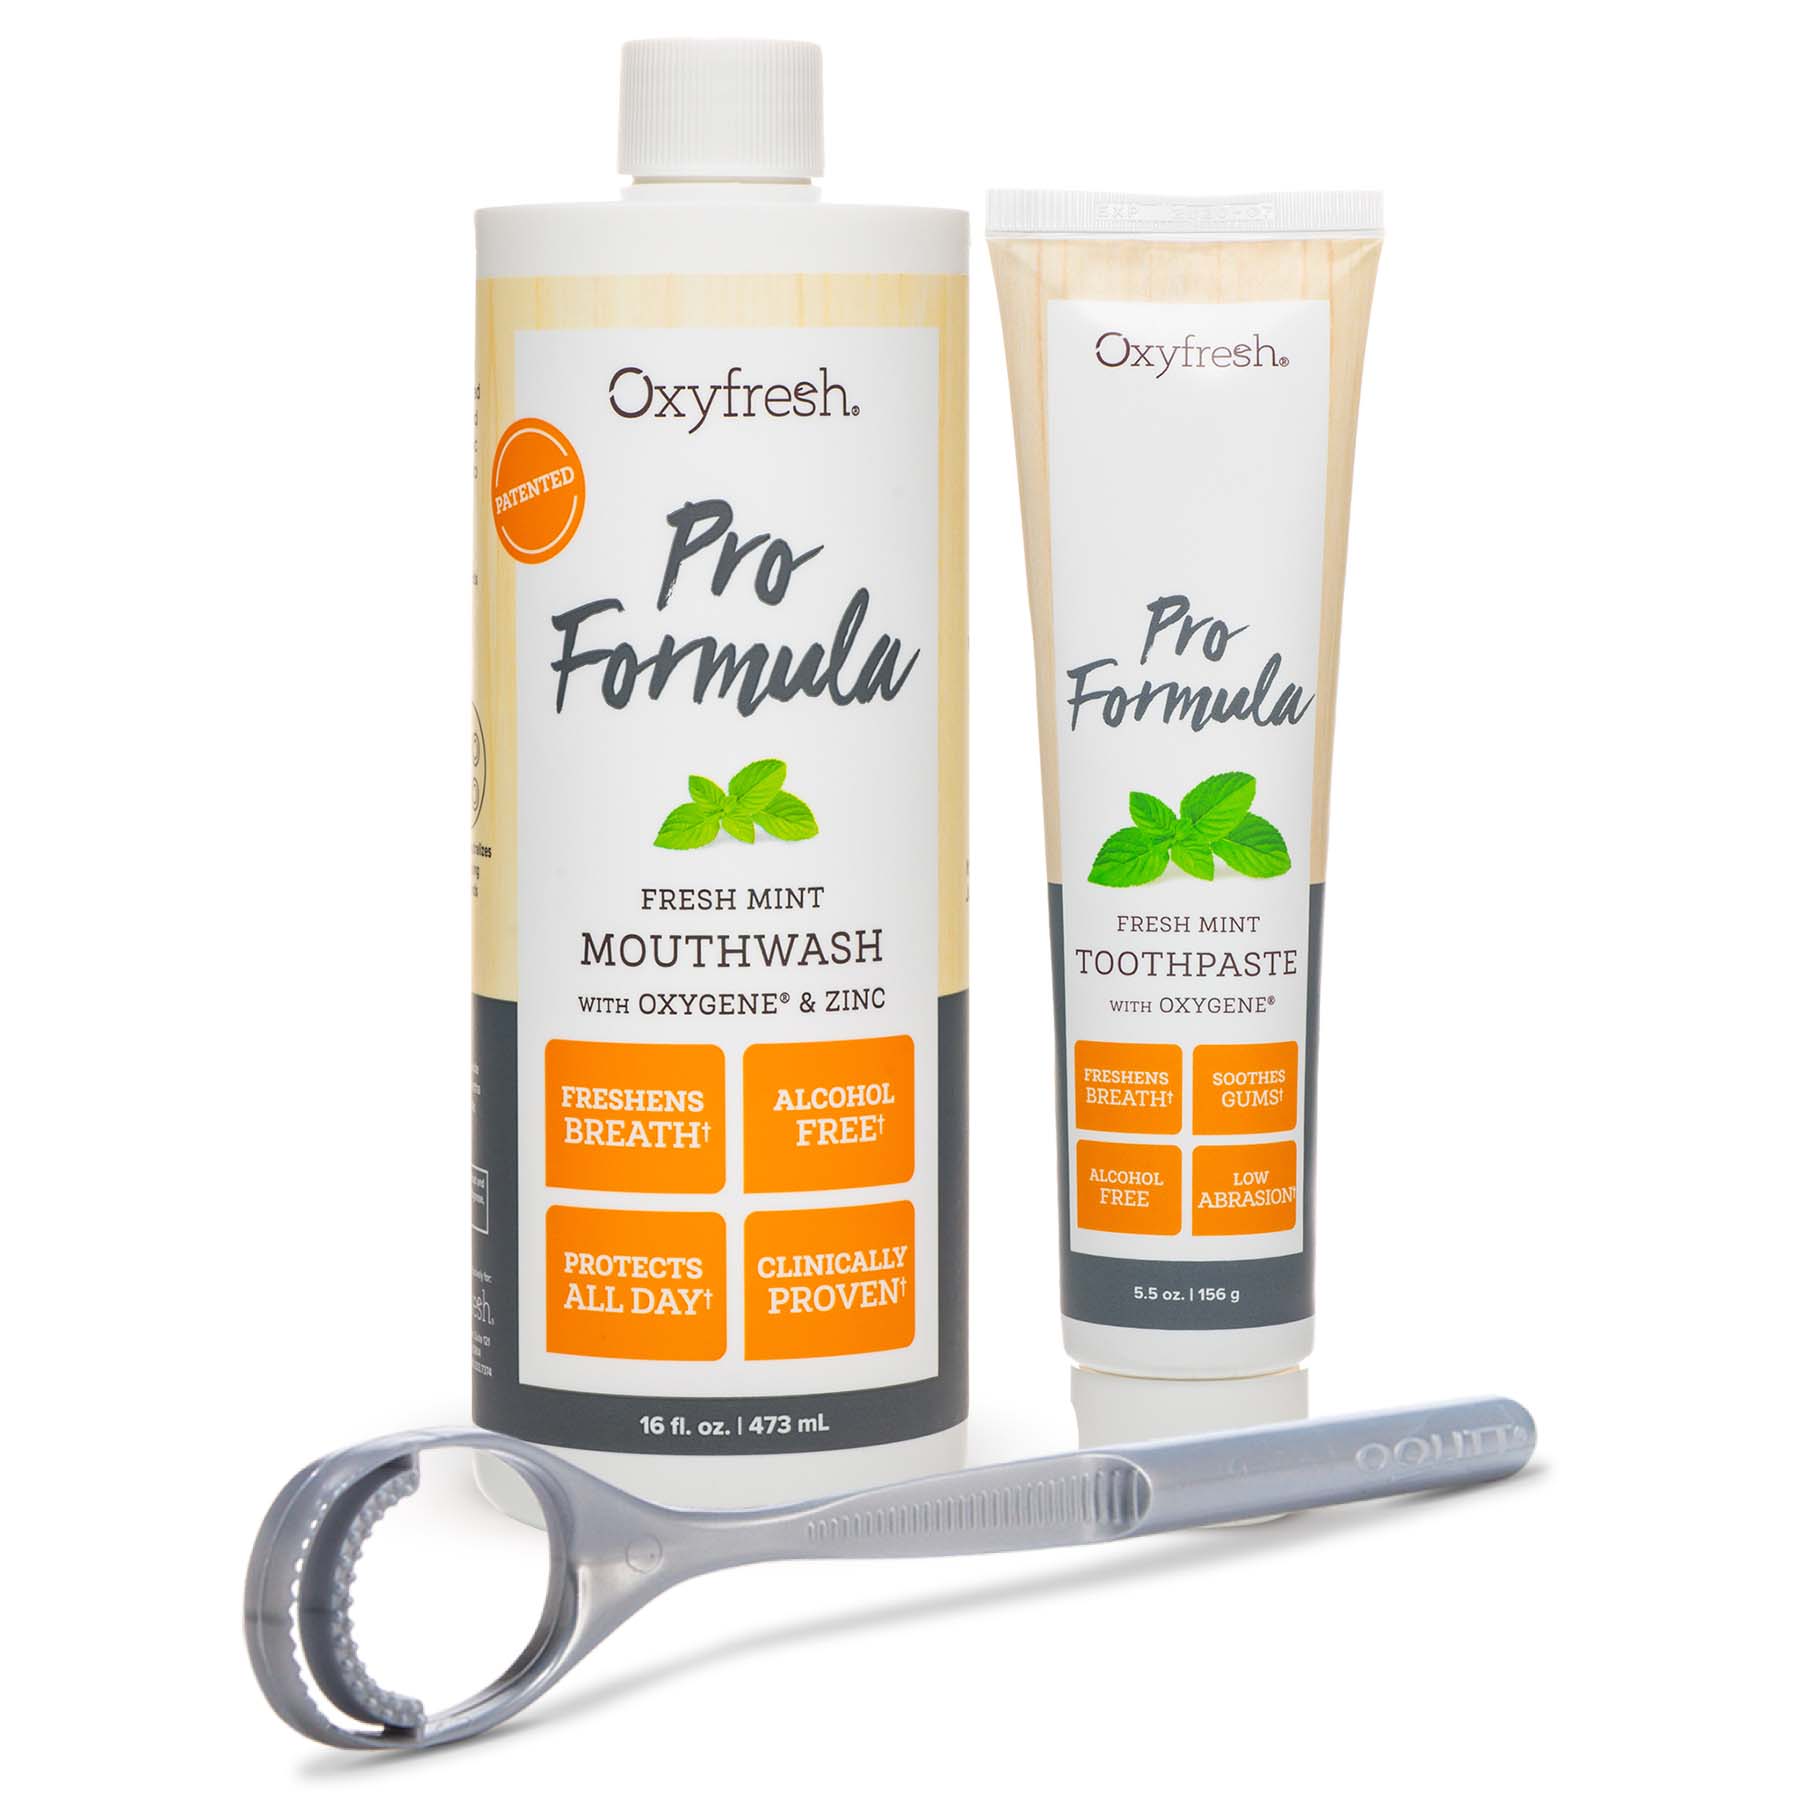 oxyfresh-pro-formula-kit-including-mouthwash-zinc-toothpaste-and-tongue-scraper